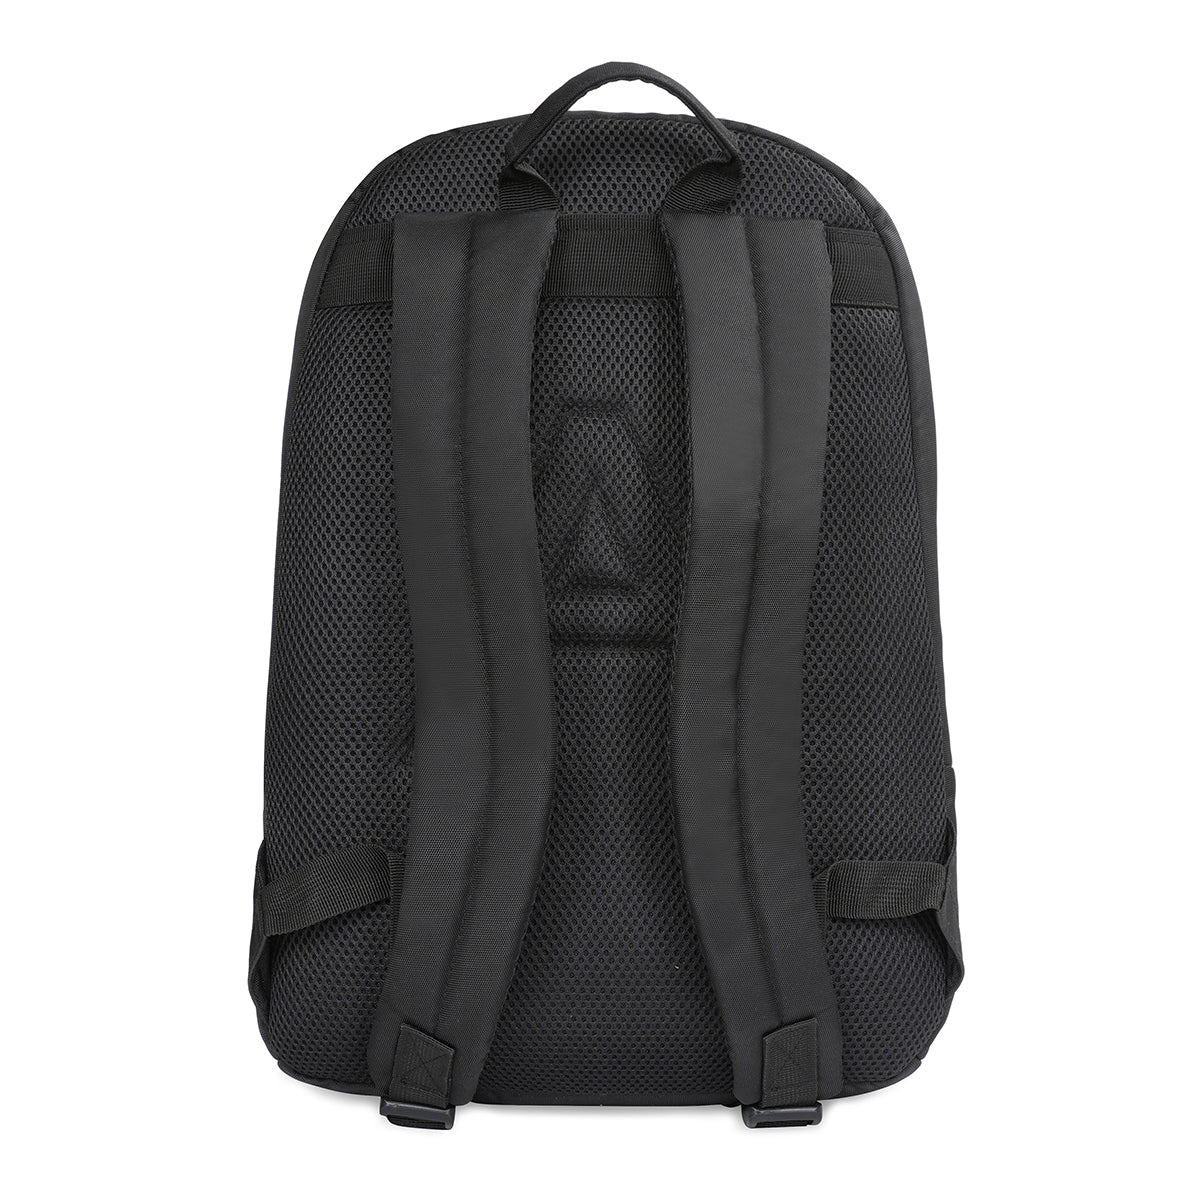 Aeropostale Fallon Non Laptop Backpack Black